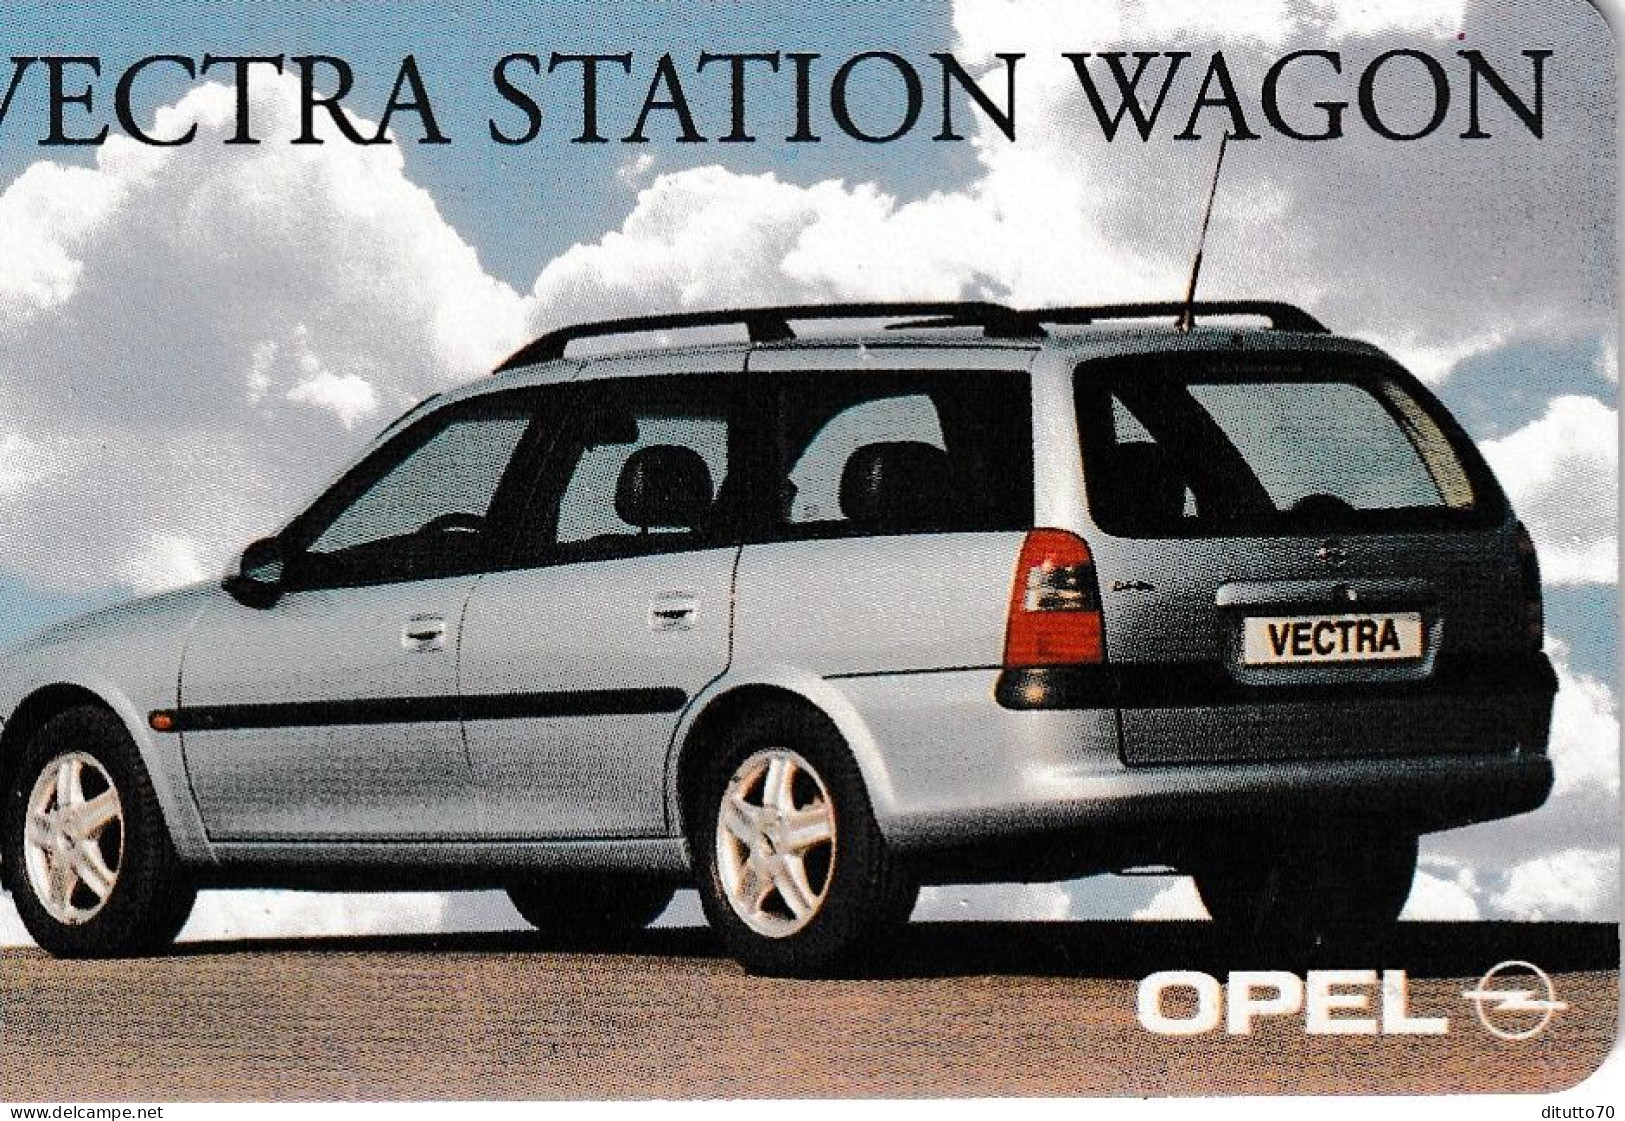 Calendarietto - Opel Vectra Station Wangon - Autocentralwe - Pesaro - Anno 1997 - Klein Formaat: 1991-00